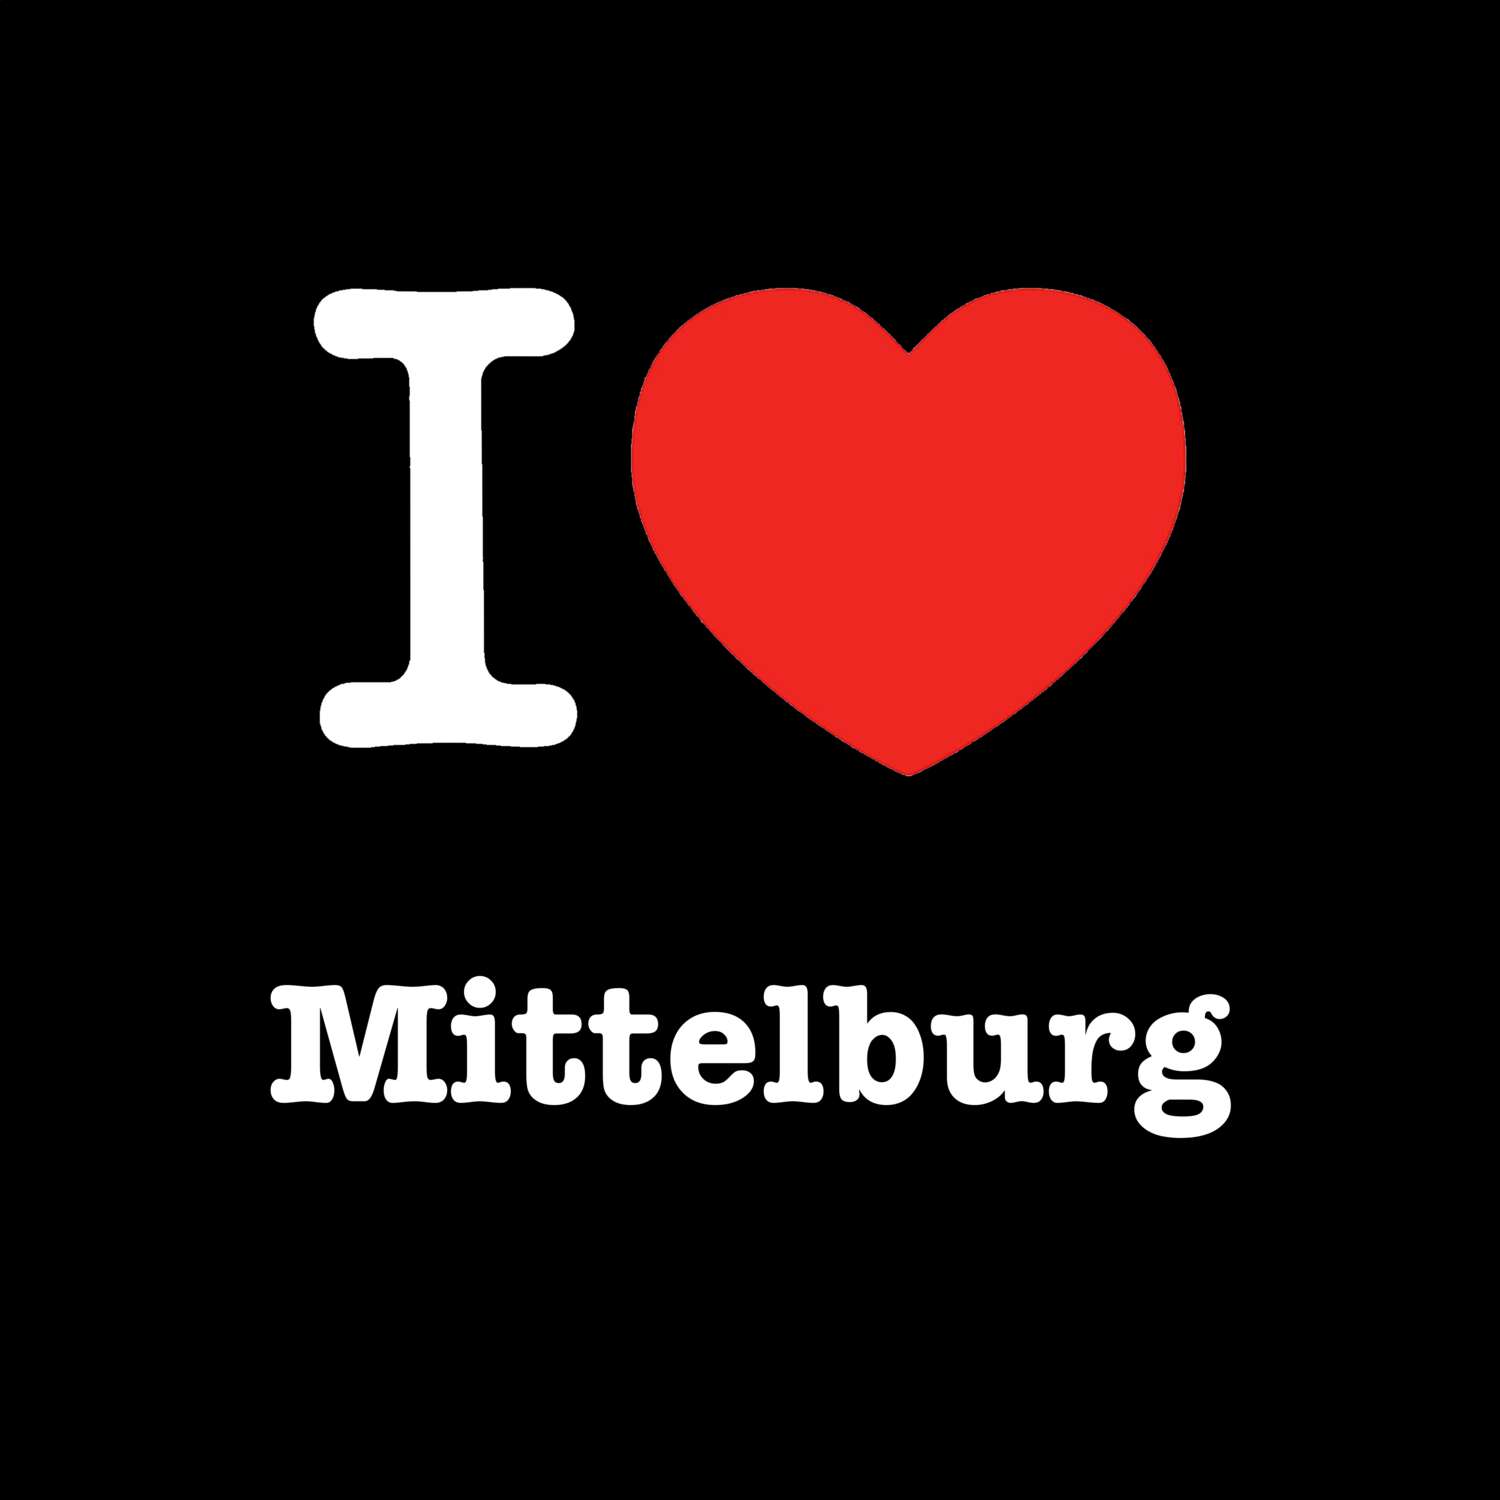 Mittelburg T-Shirt »I love«